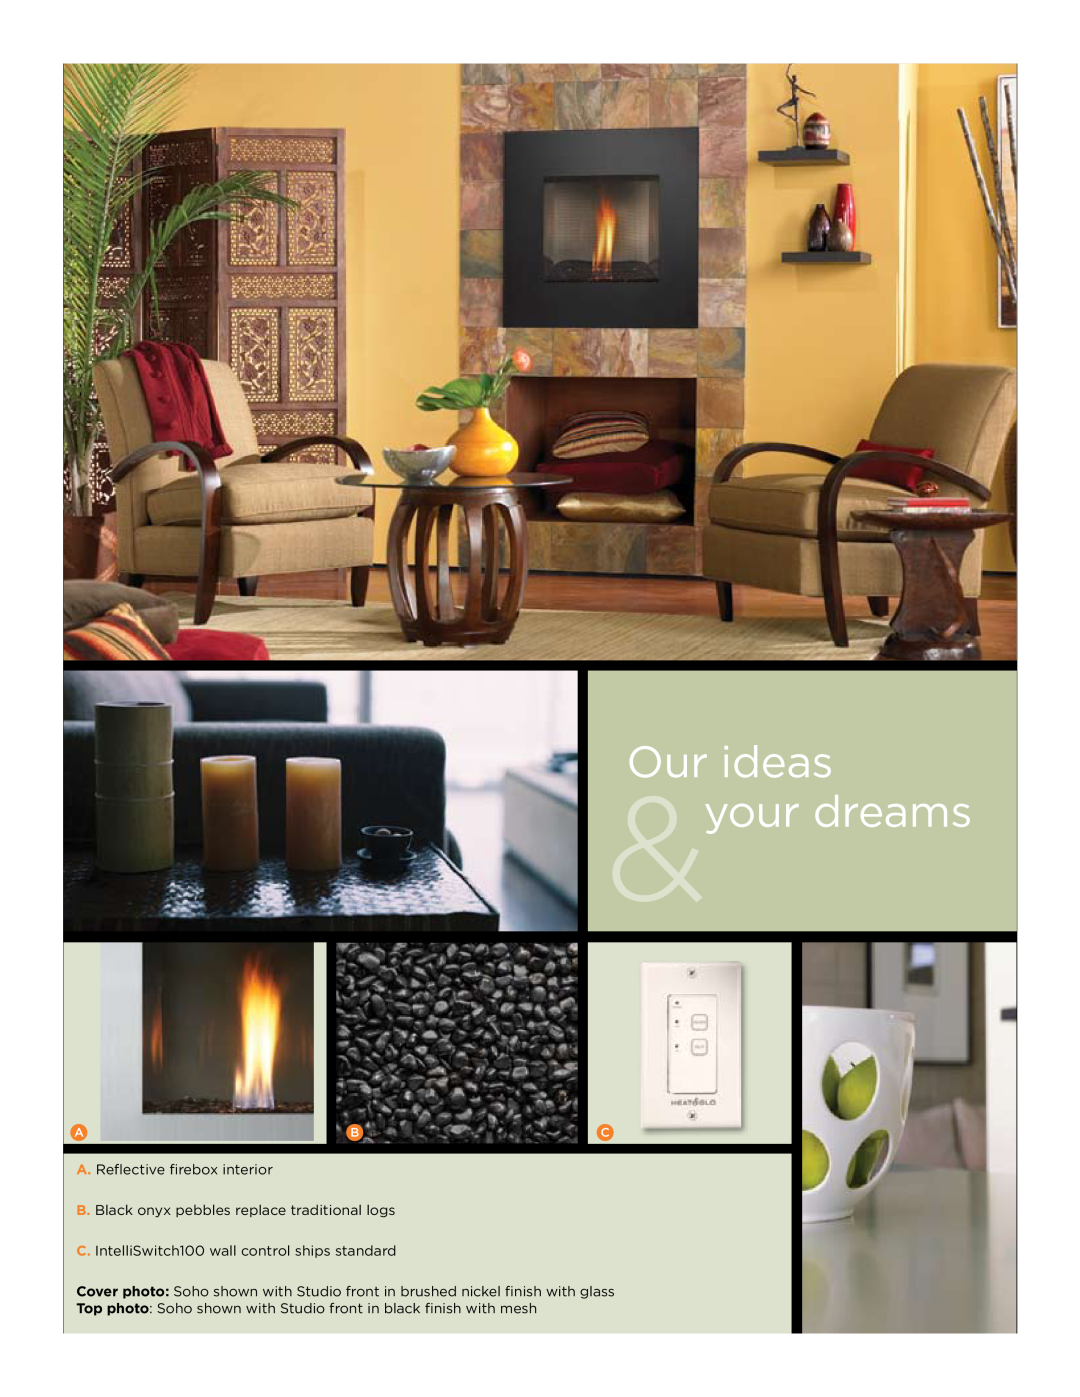 Hearth and Home Technologies SOHO manual Our ideas &your dreams, A. Reflective firebox interior 